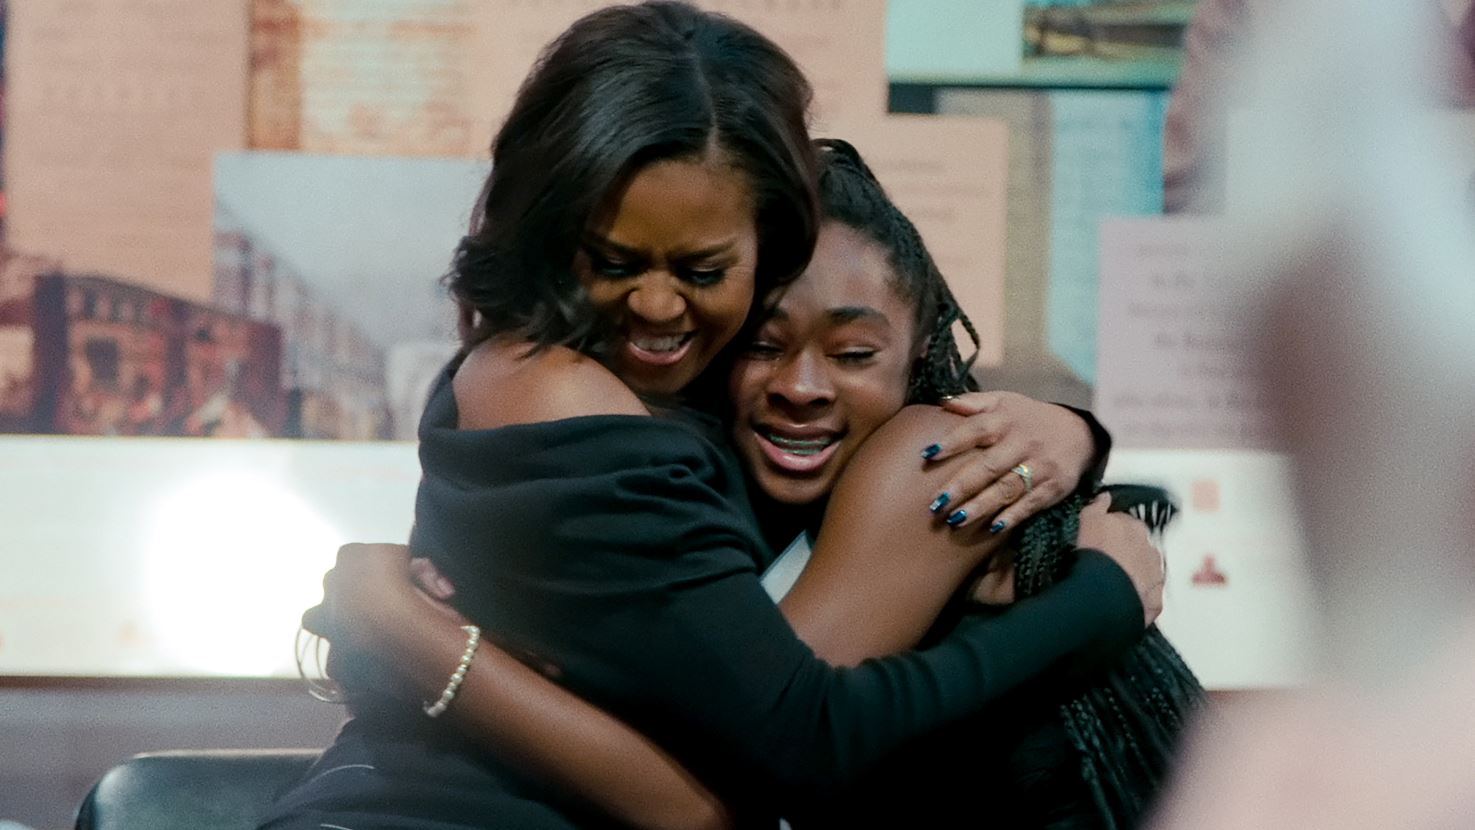 Michelle Obama documental Netflix becoming